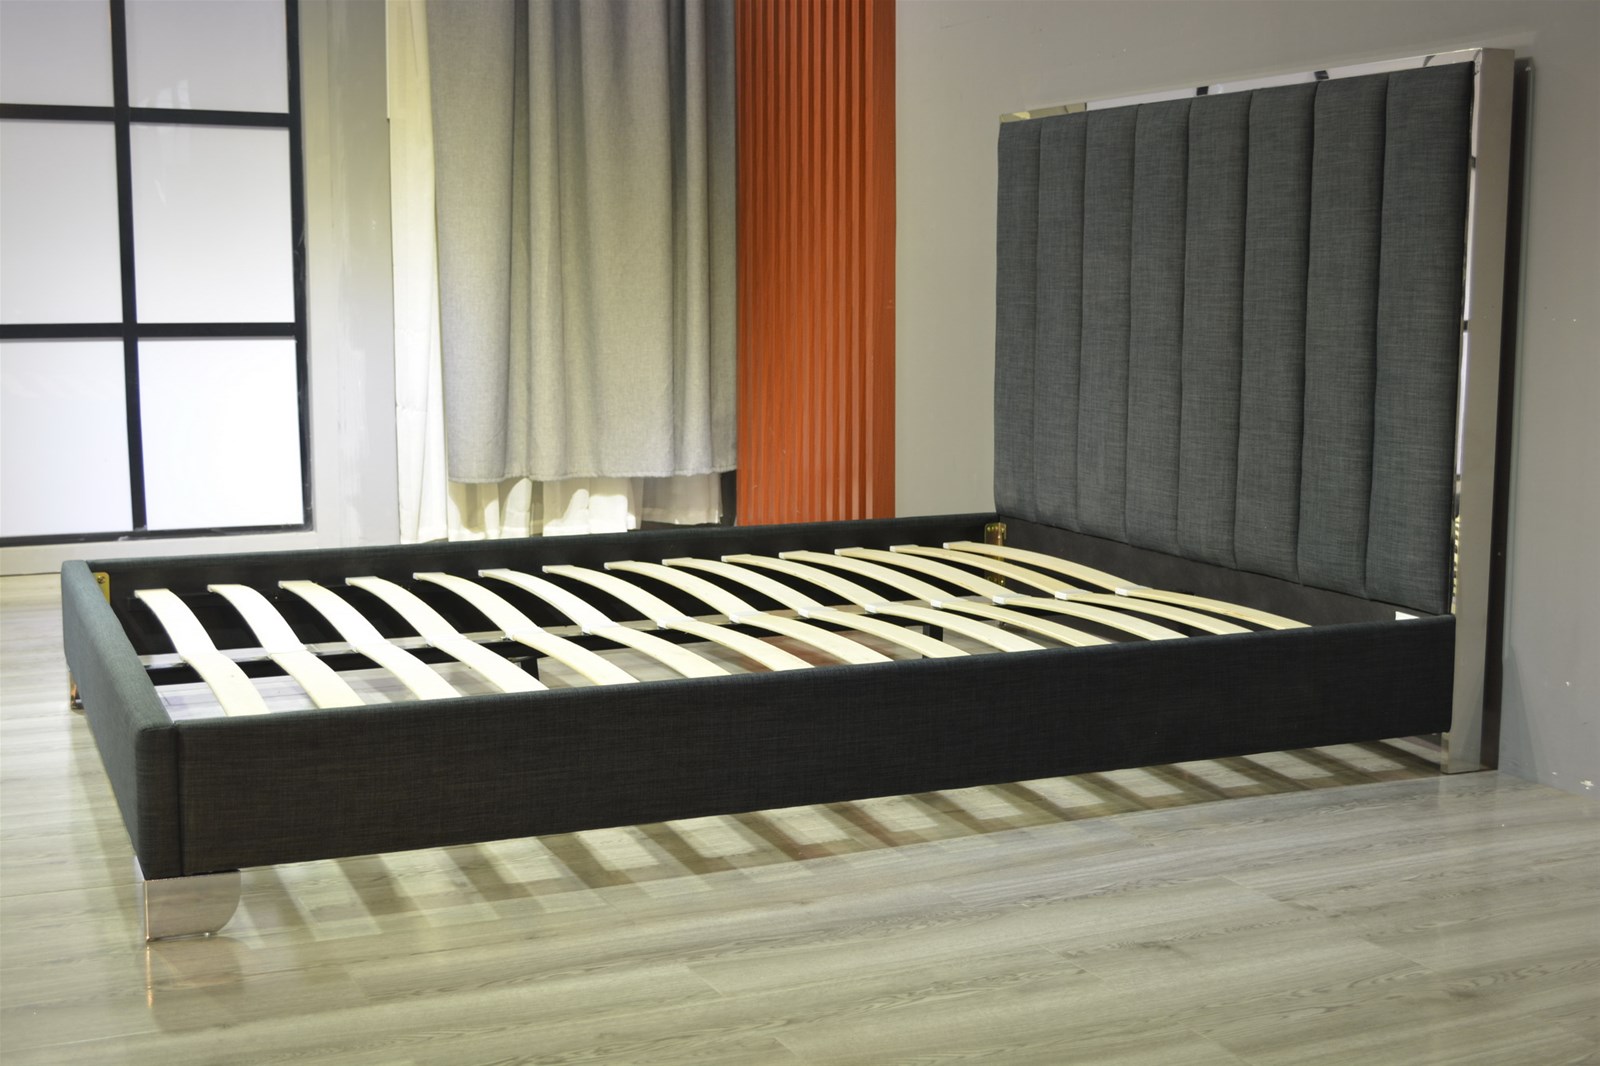 Flat Bed Modern Storage Bed Home Furniture Set Cloth Adult